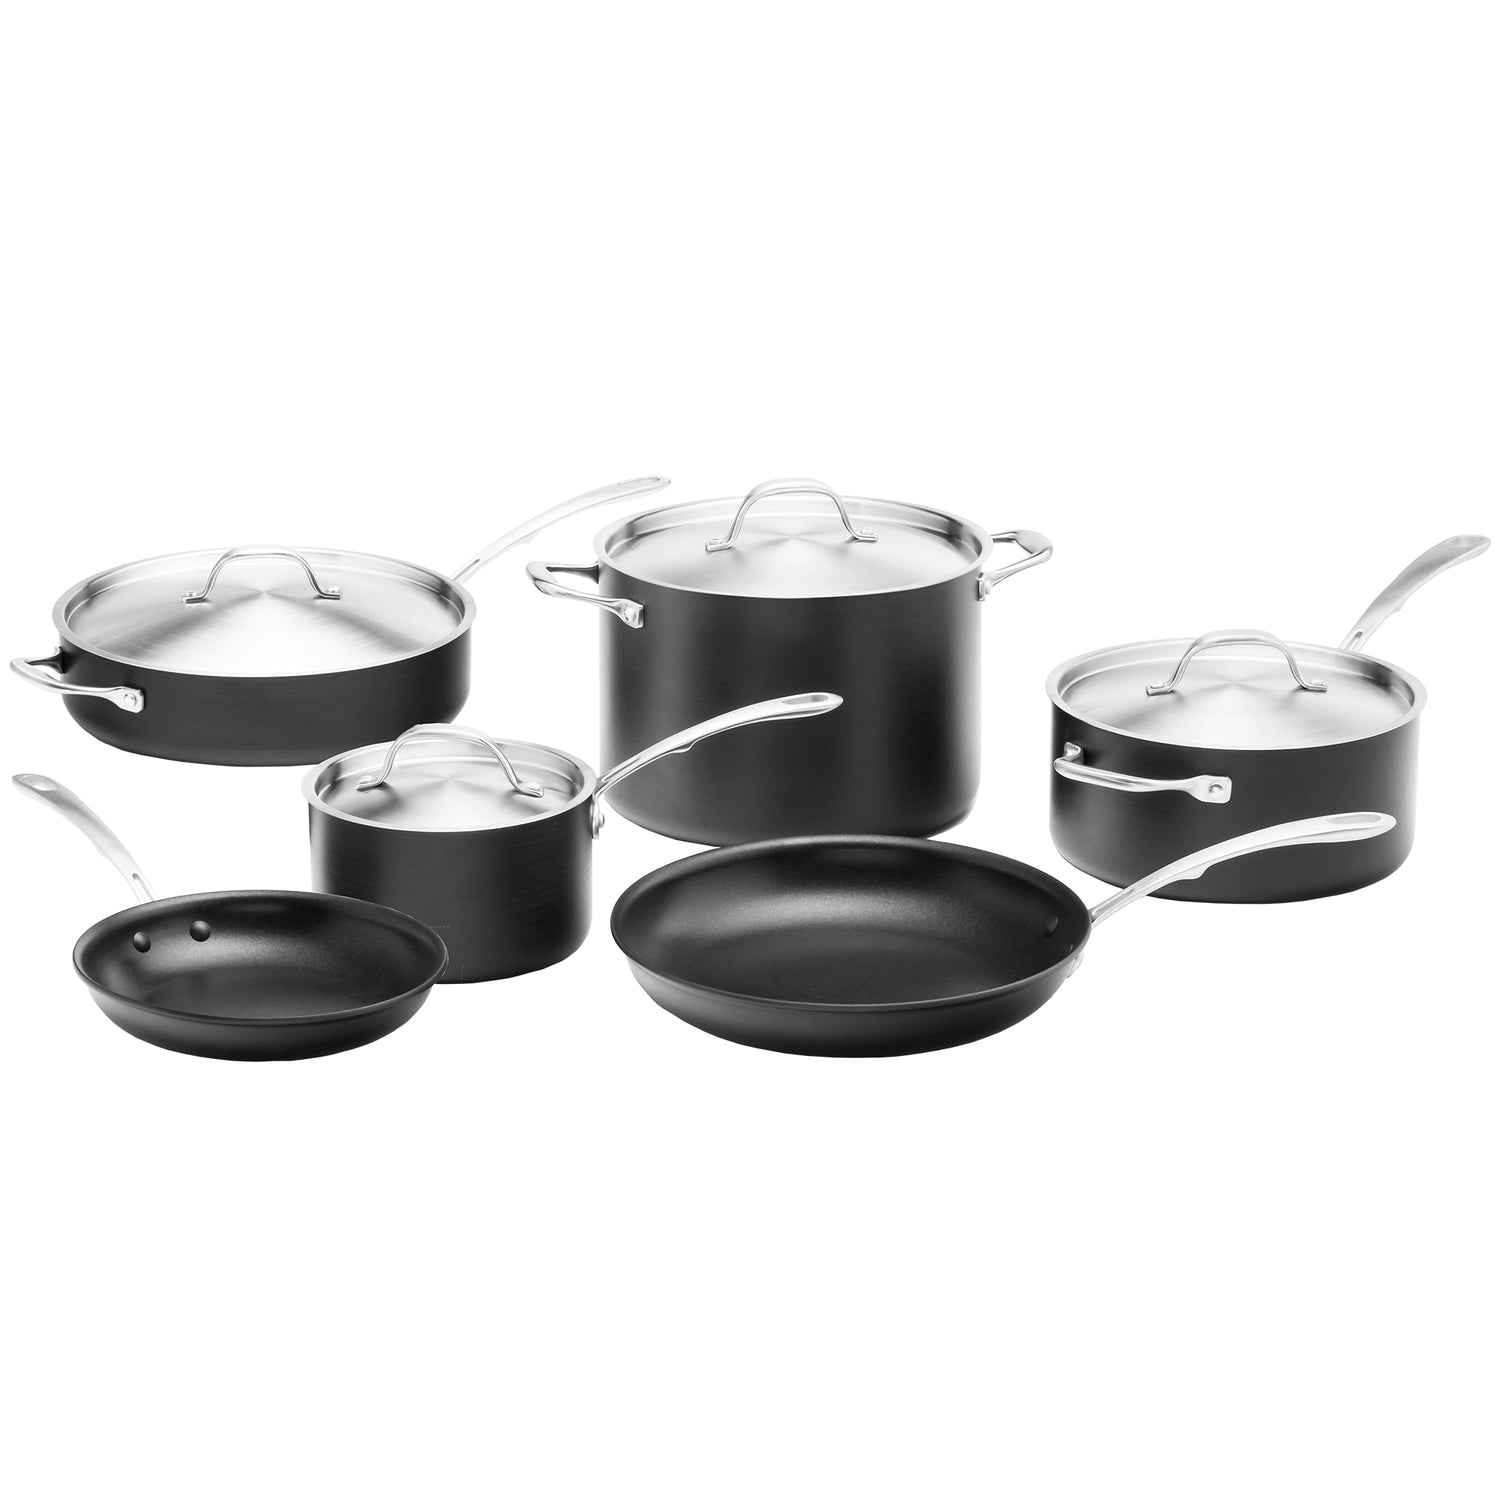 cohafa pots and pans sets, nonstick cookware set, induction pan set,  chemical-free kitchen sets, saucepan, frying pan, black,5 piece